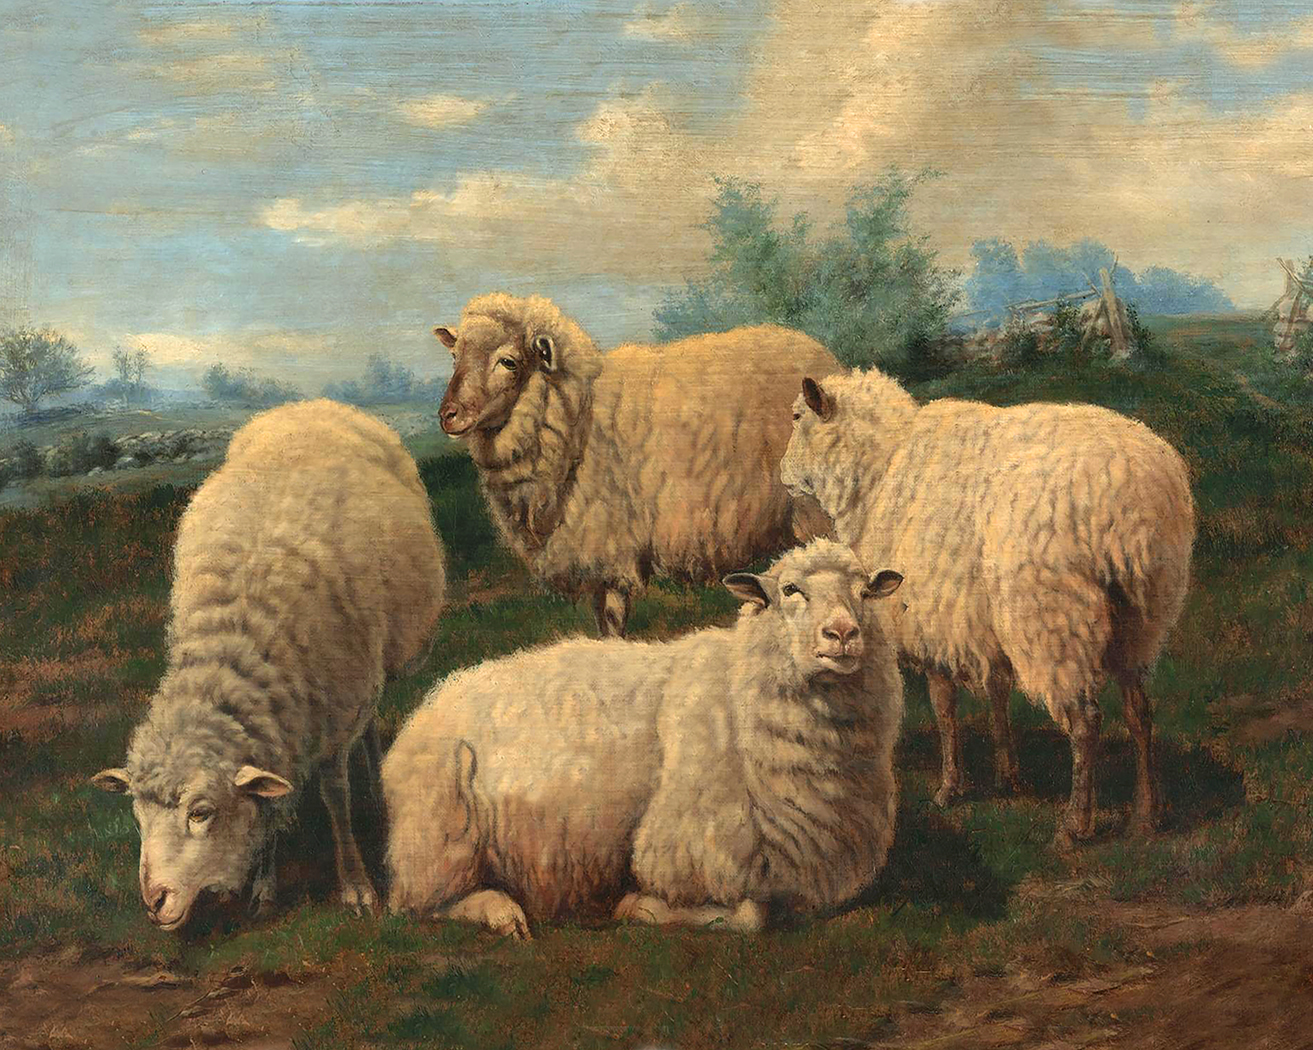 Farm/Pastoral Farm Flock of Sheep Gathered Oil Painting R ...